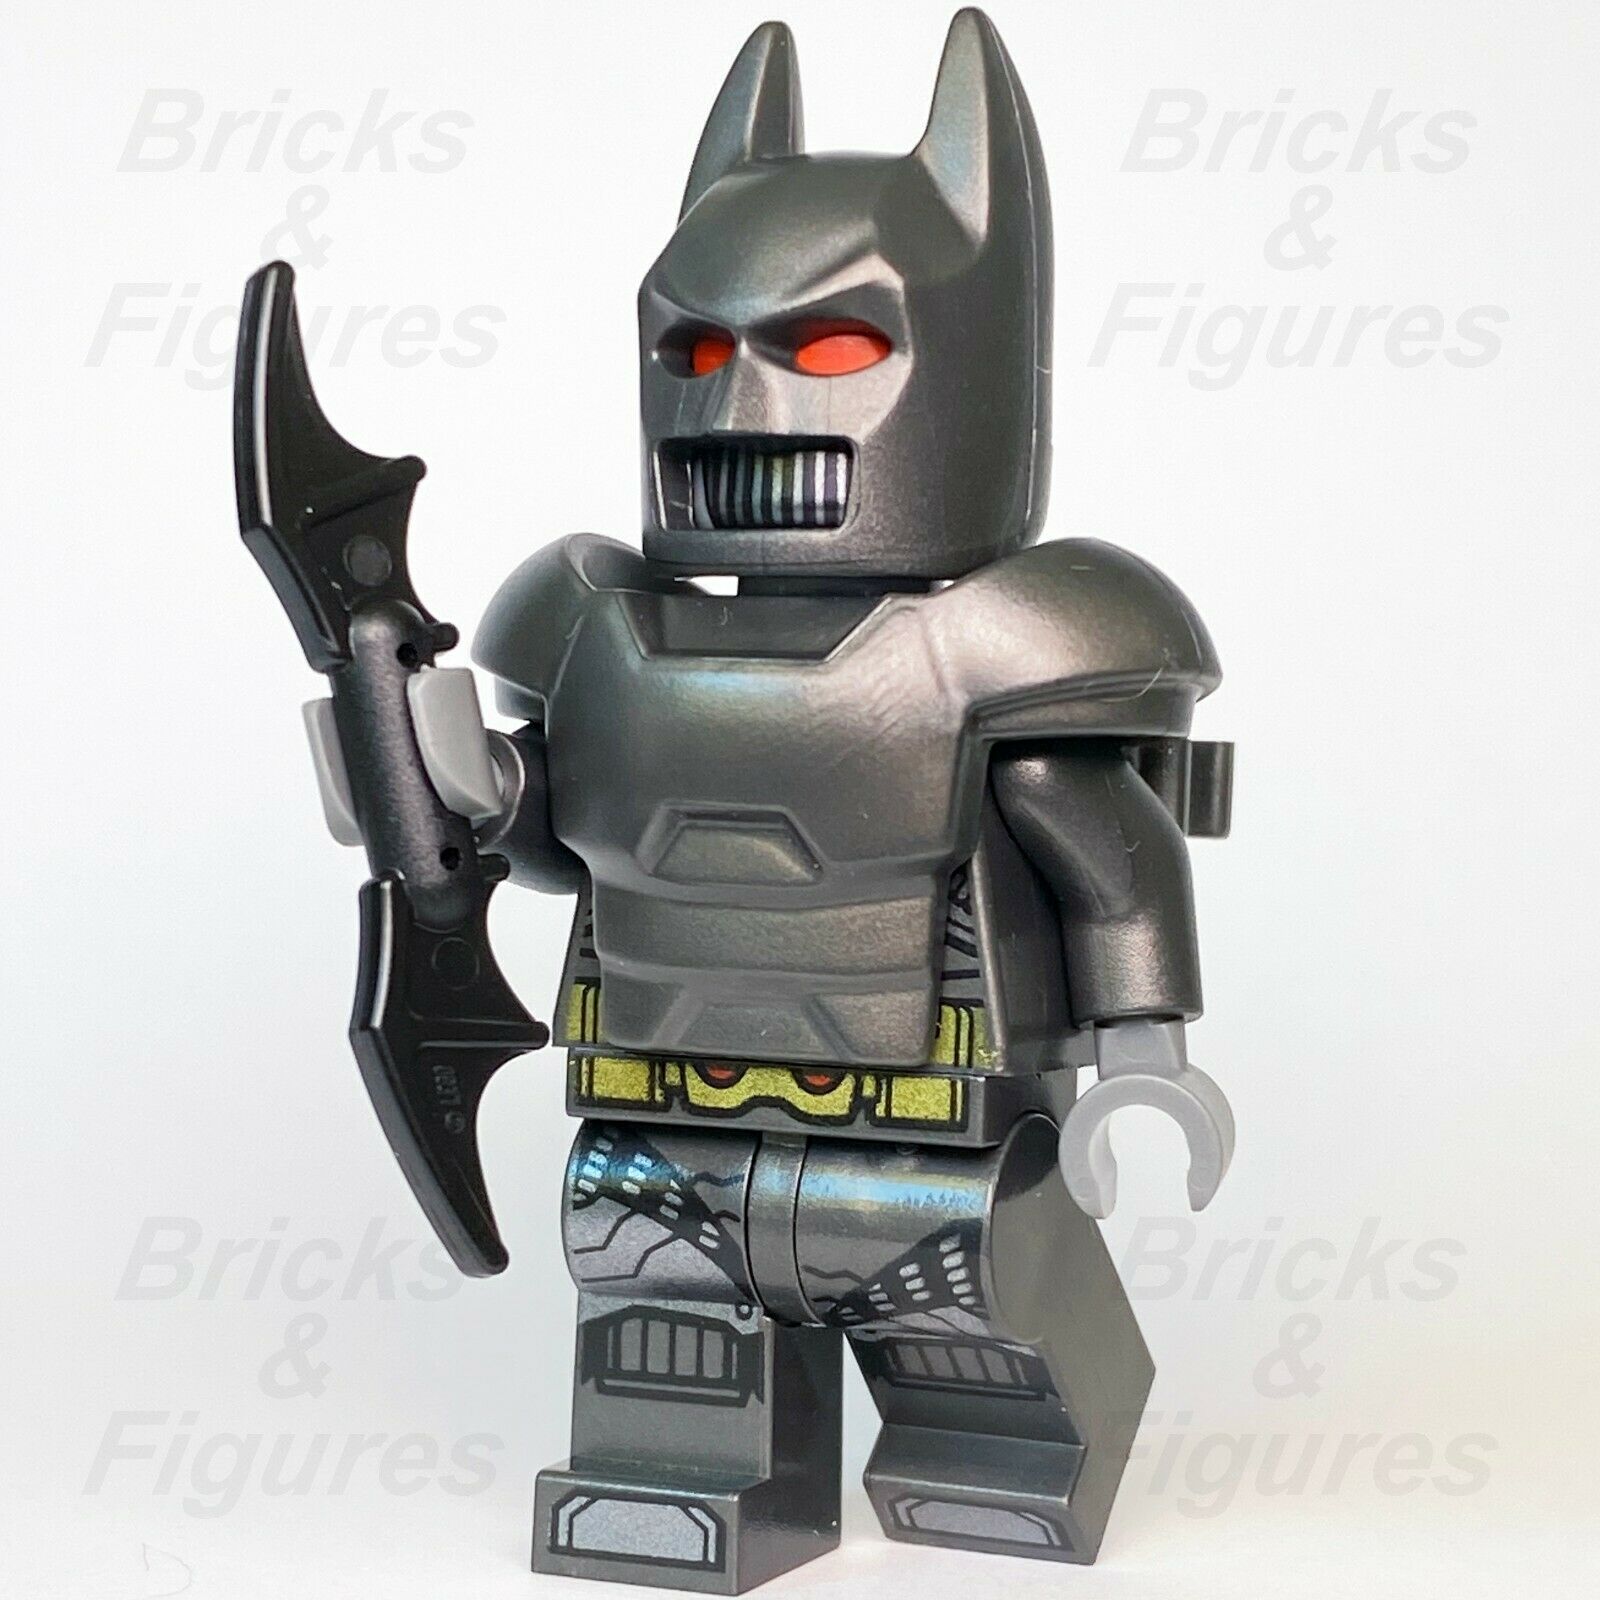 DC Super Heroes LEGO Batman 2 Heavy Armor Justice League Minifigure from set 76110 - Bricks & Figures